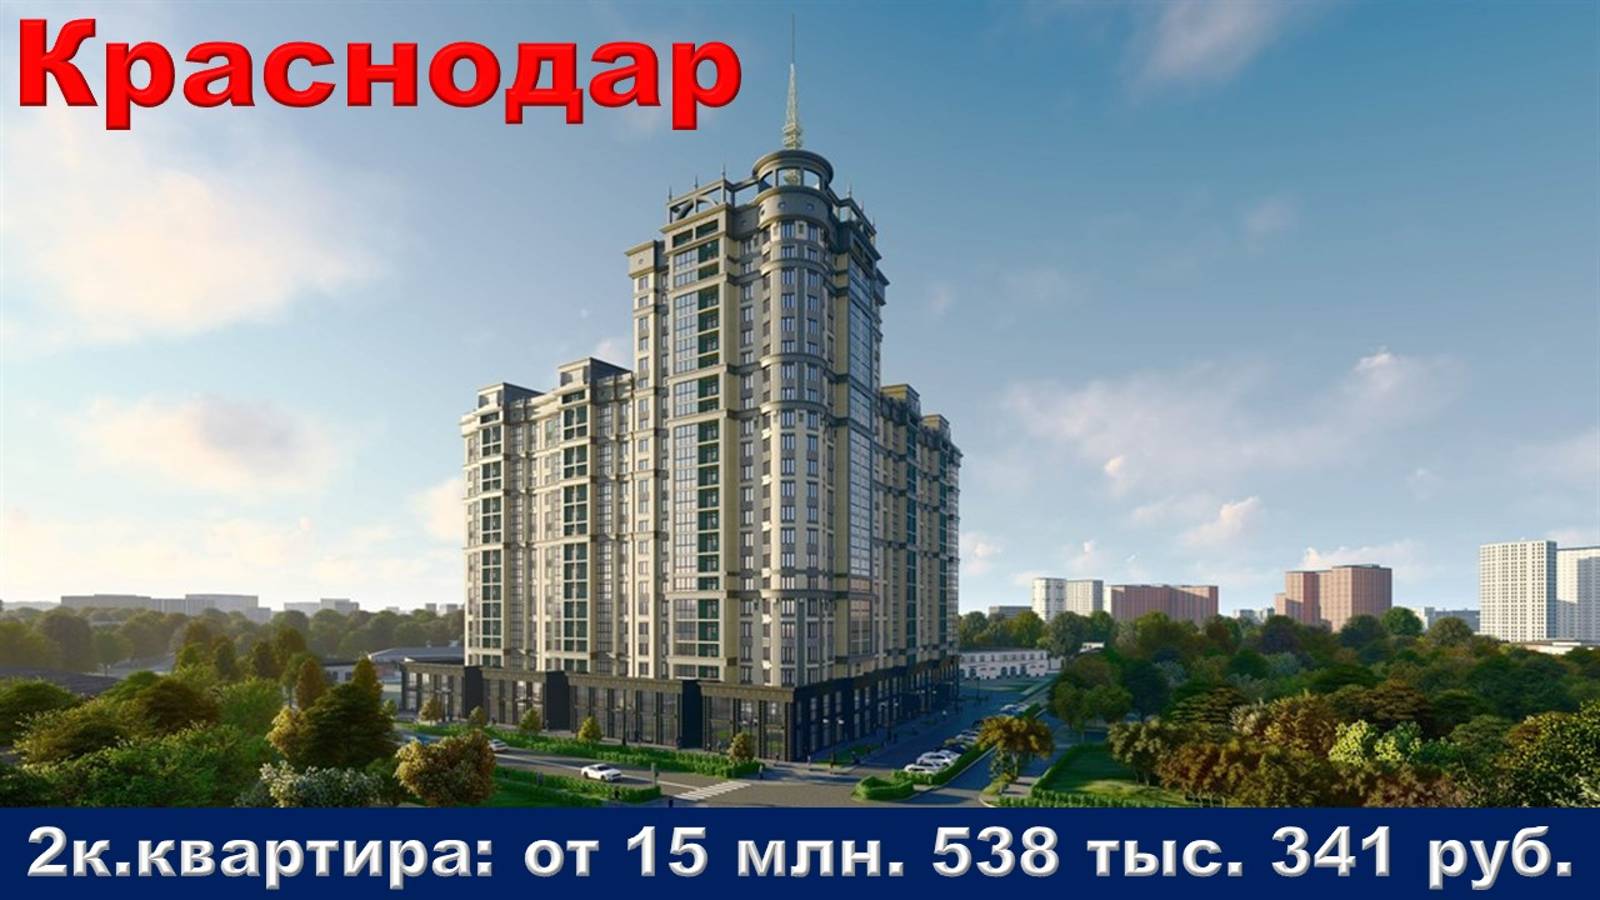 Краснодар. 2к. квартира от 15 млн. 538 тыс. 341 руб.